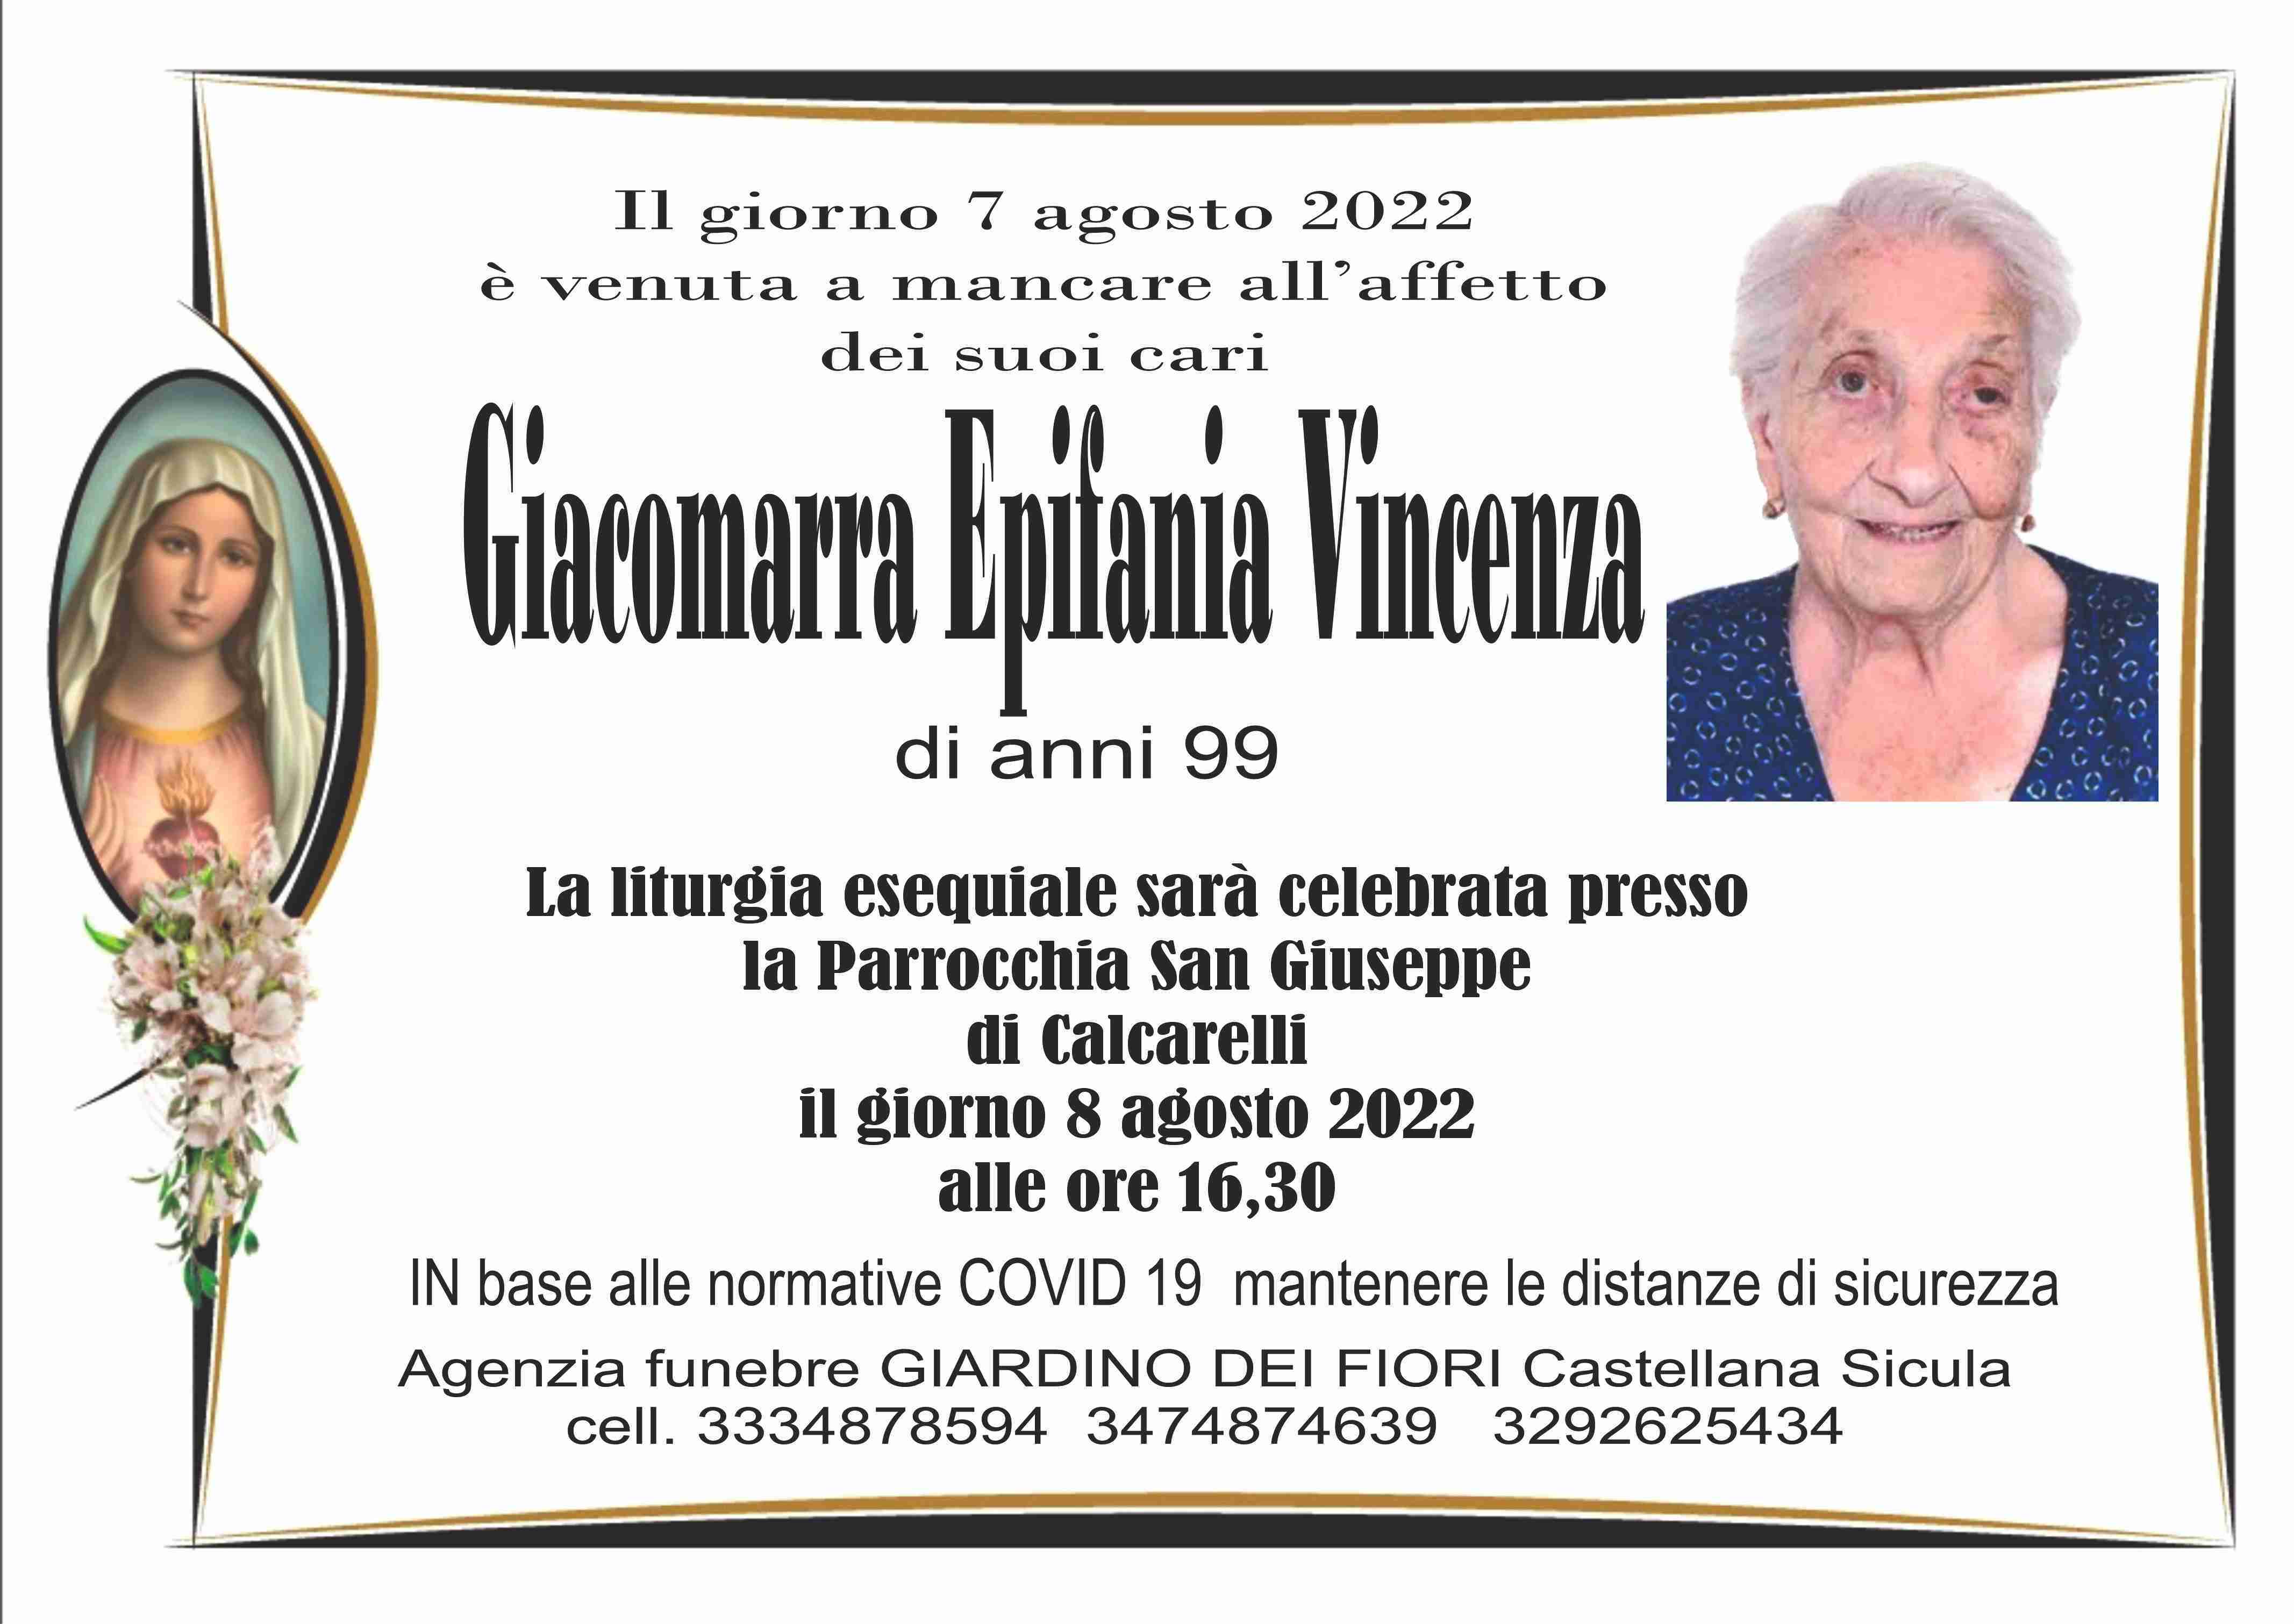 Epifania Vincenza Giacomarra